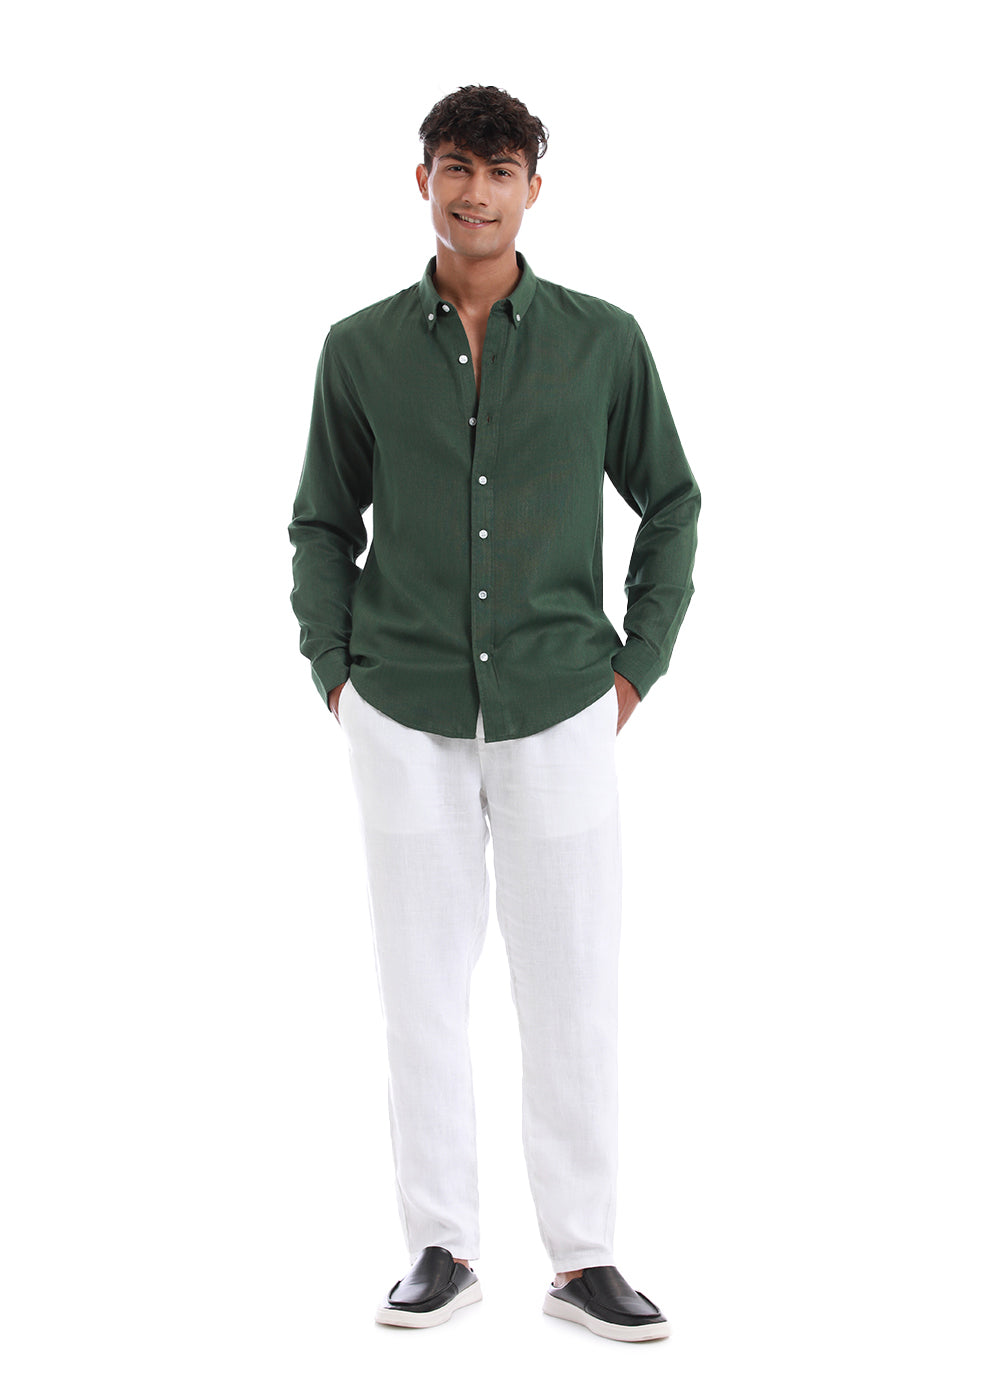 Cilantro Green Blended 100% Linen shirt